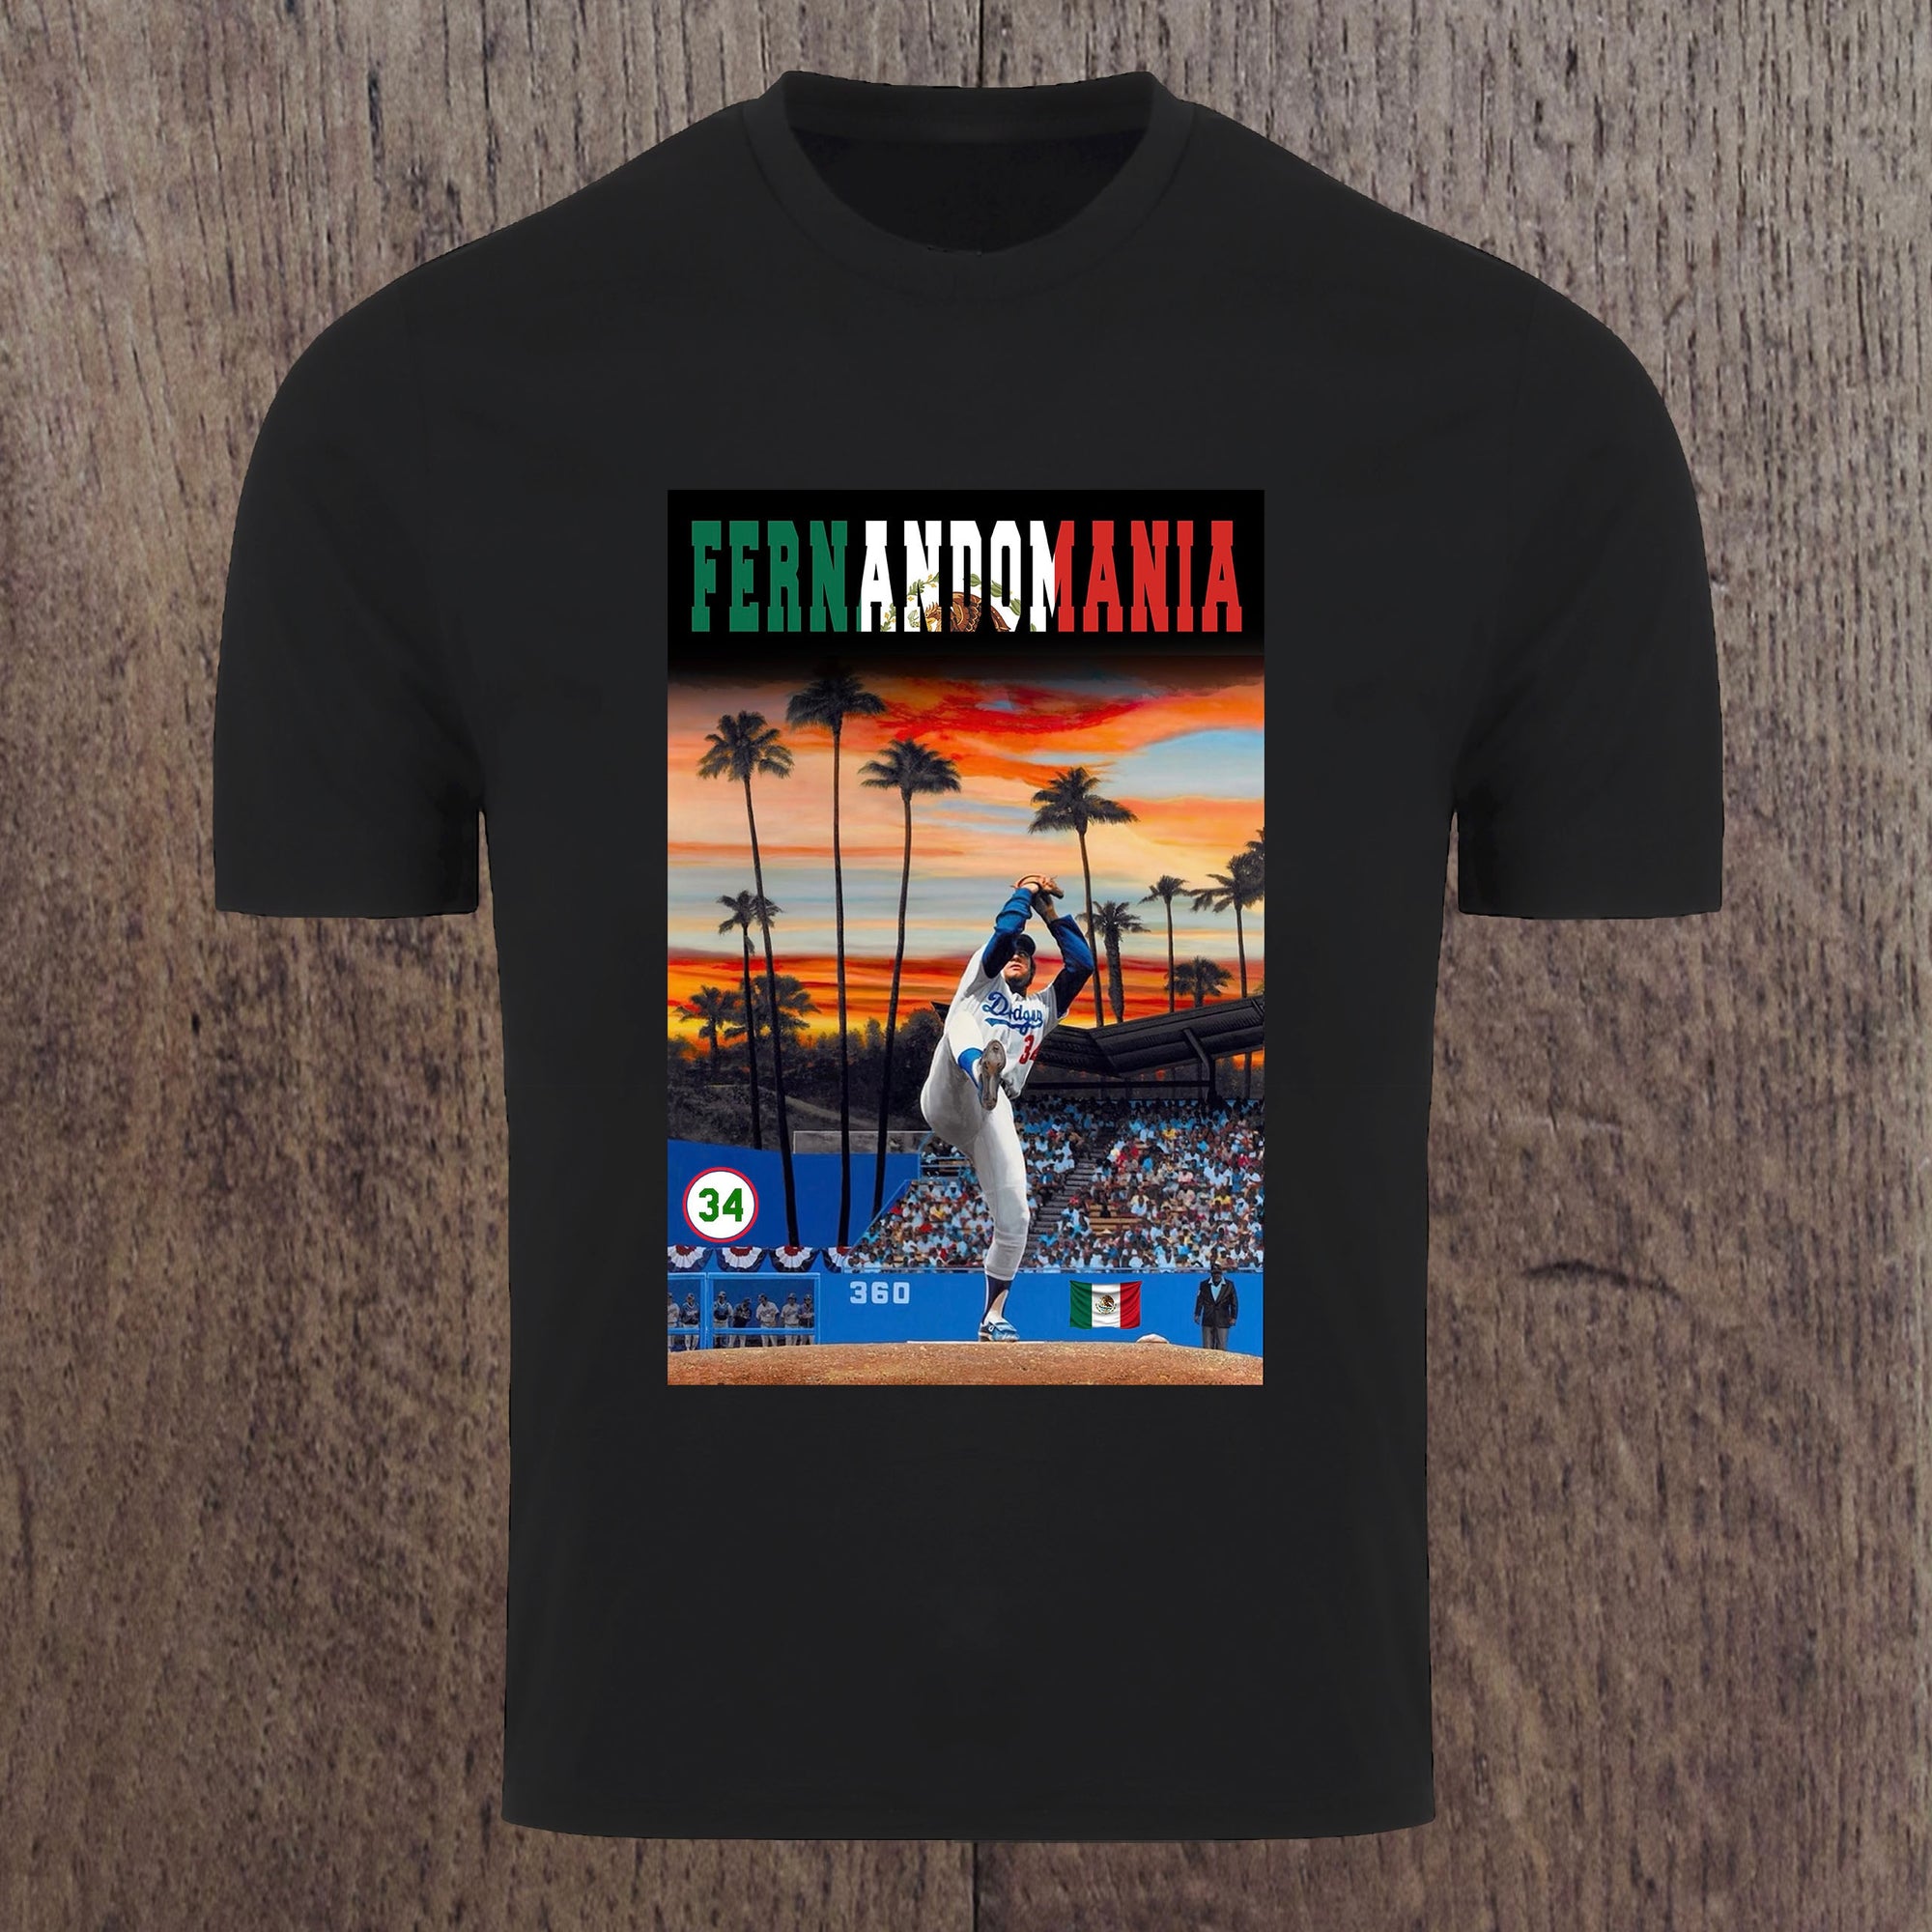 Fernando Valenzuela | Kids T-Shirt